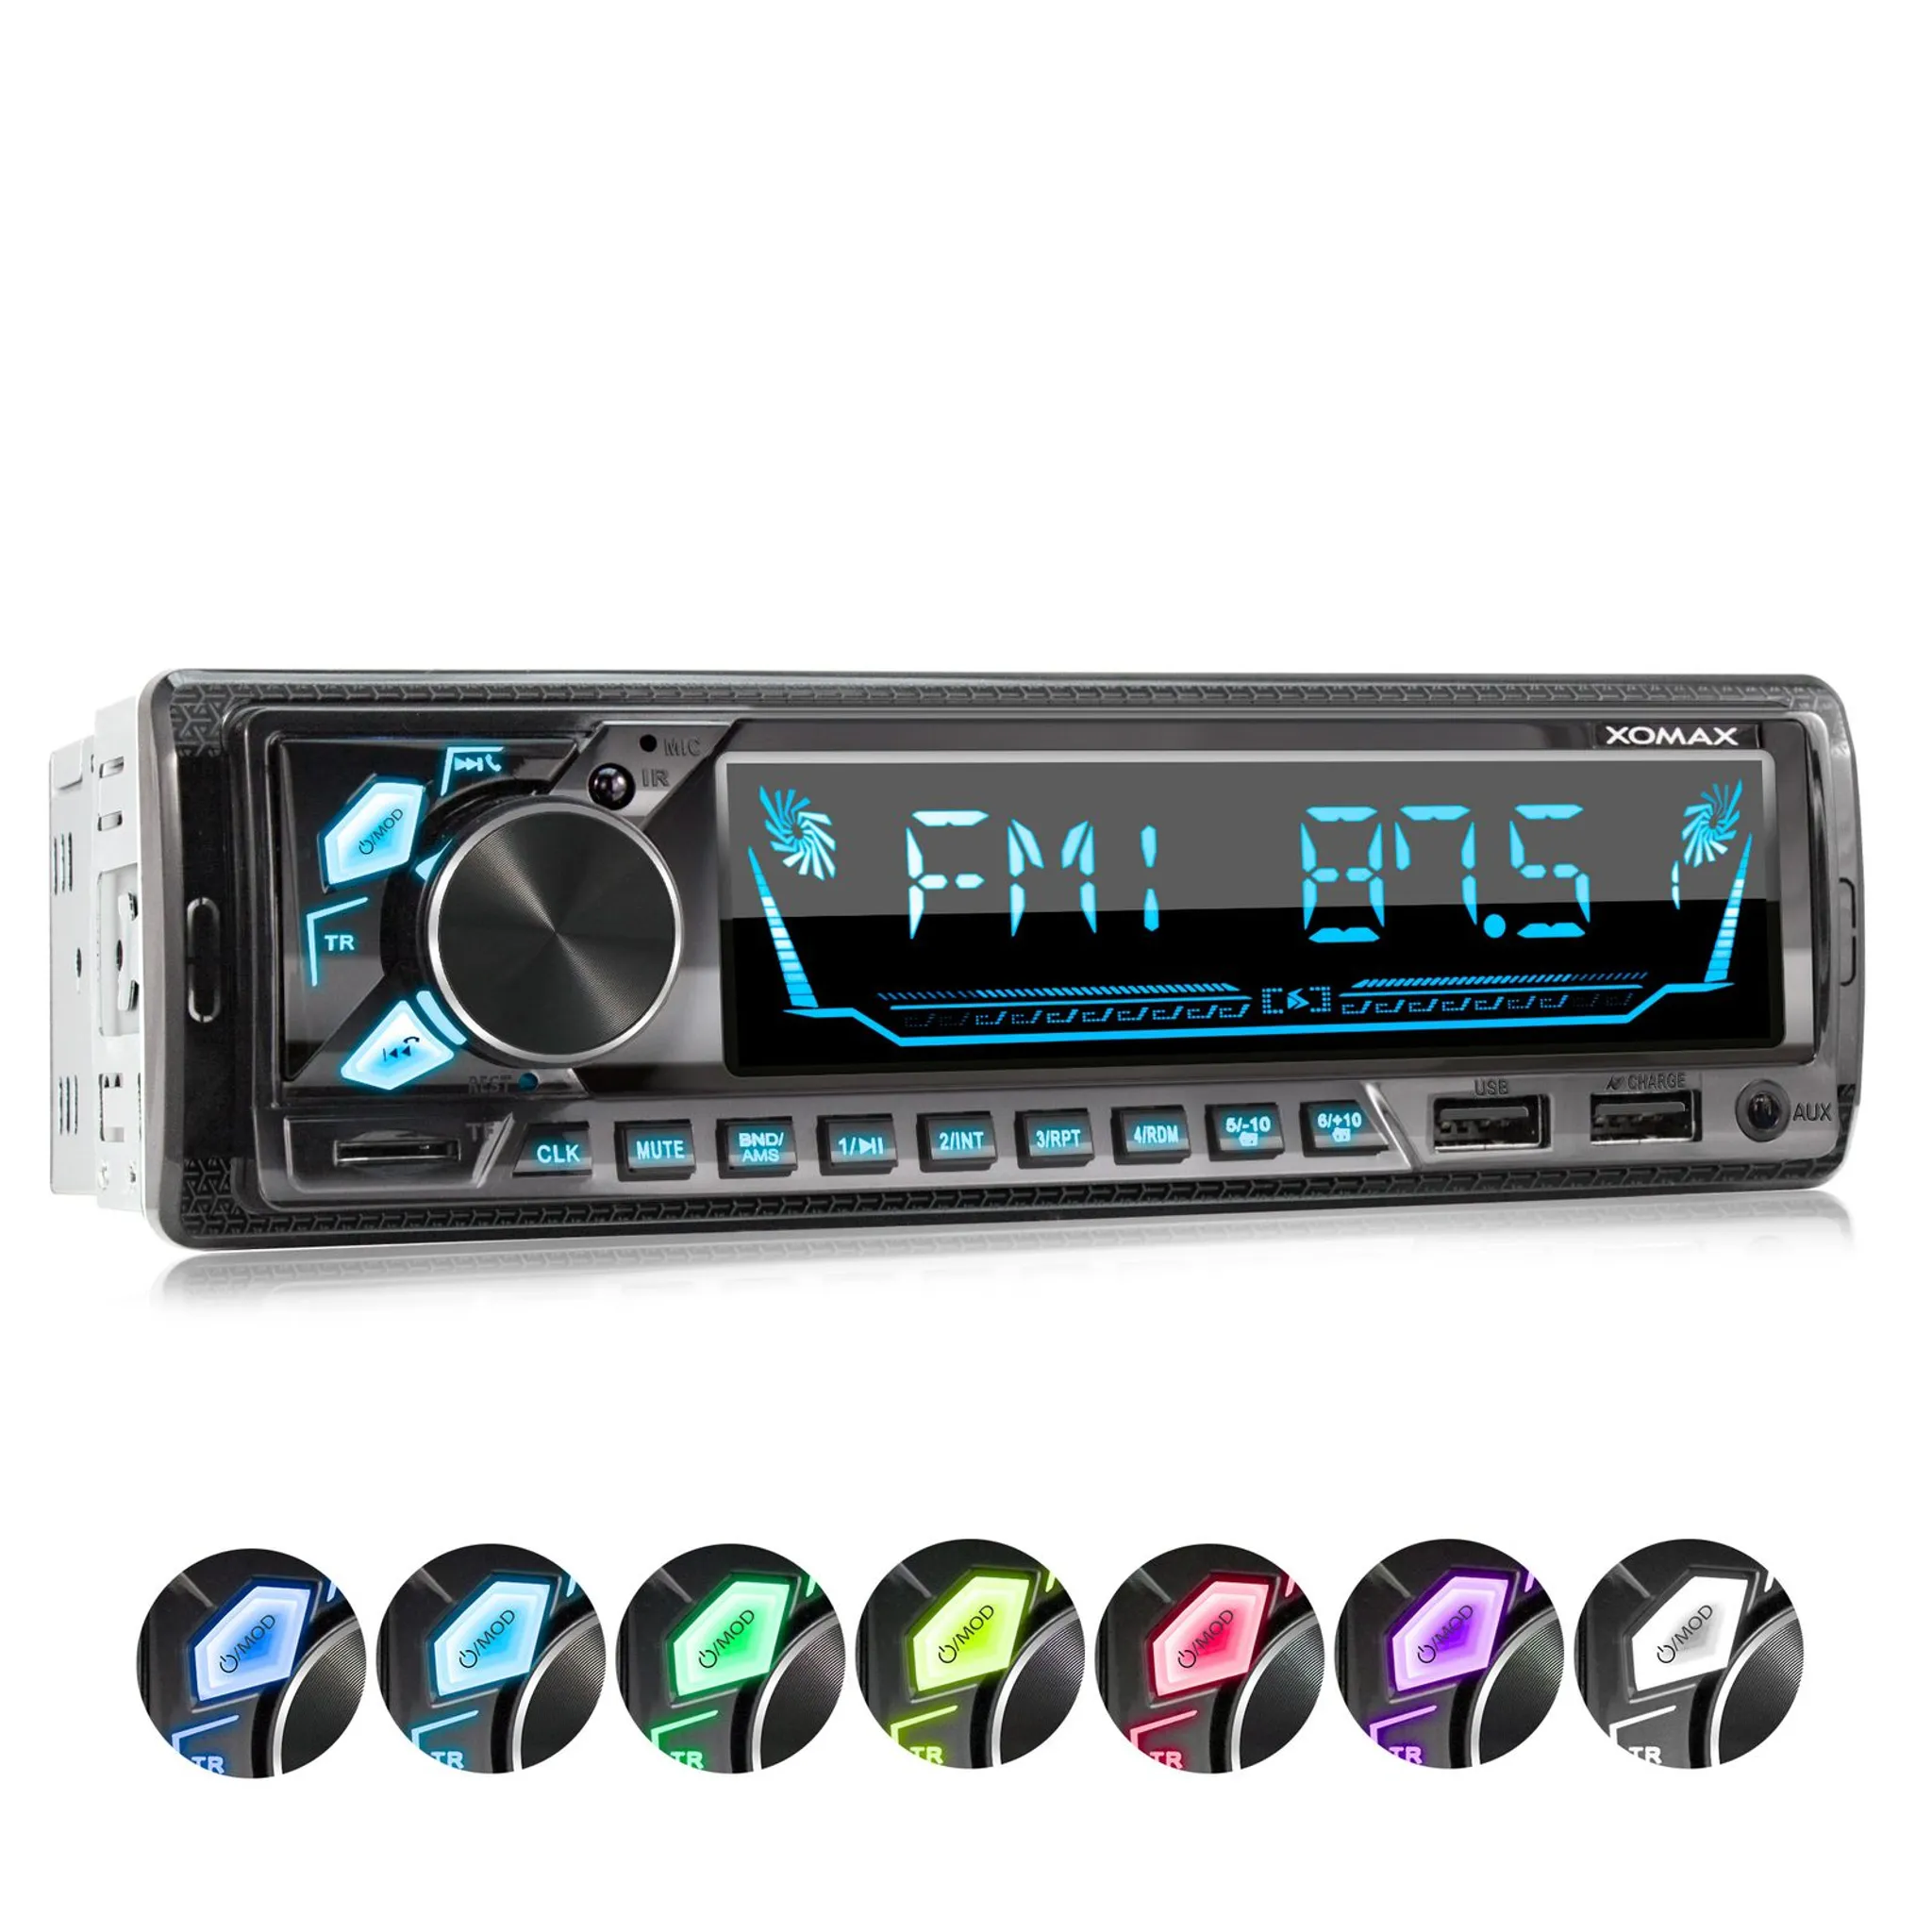 Paket] XOMAX XM-V780 1DIN Autoradio mit SD, USB und BLUETOOTH